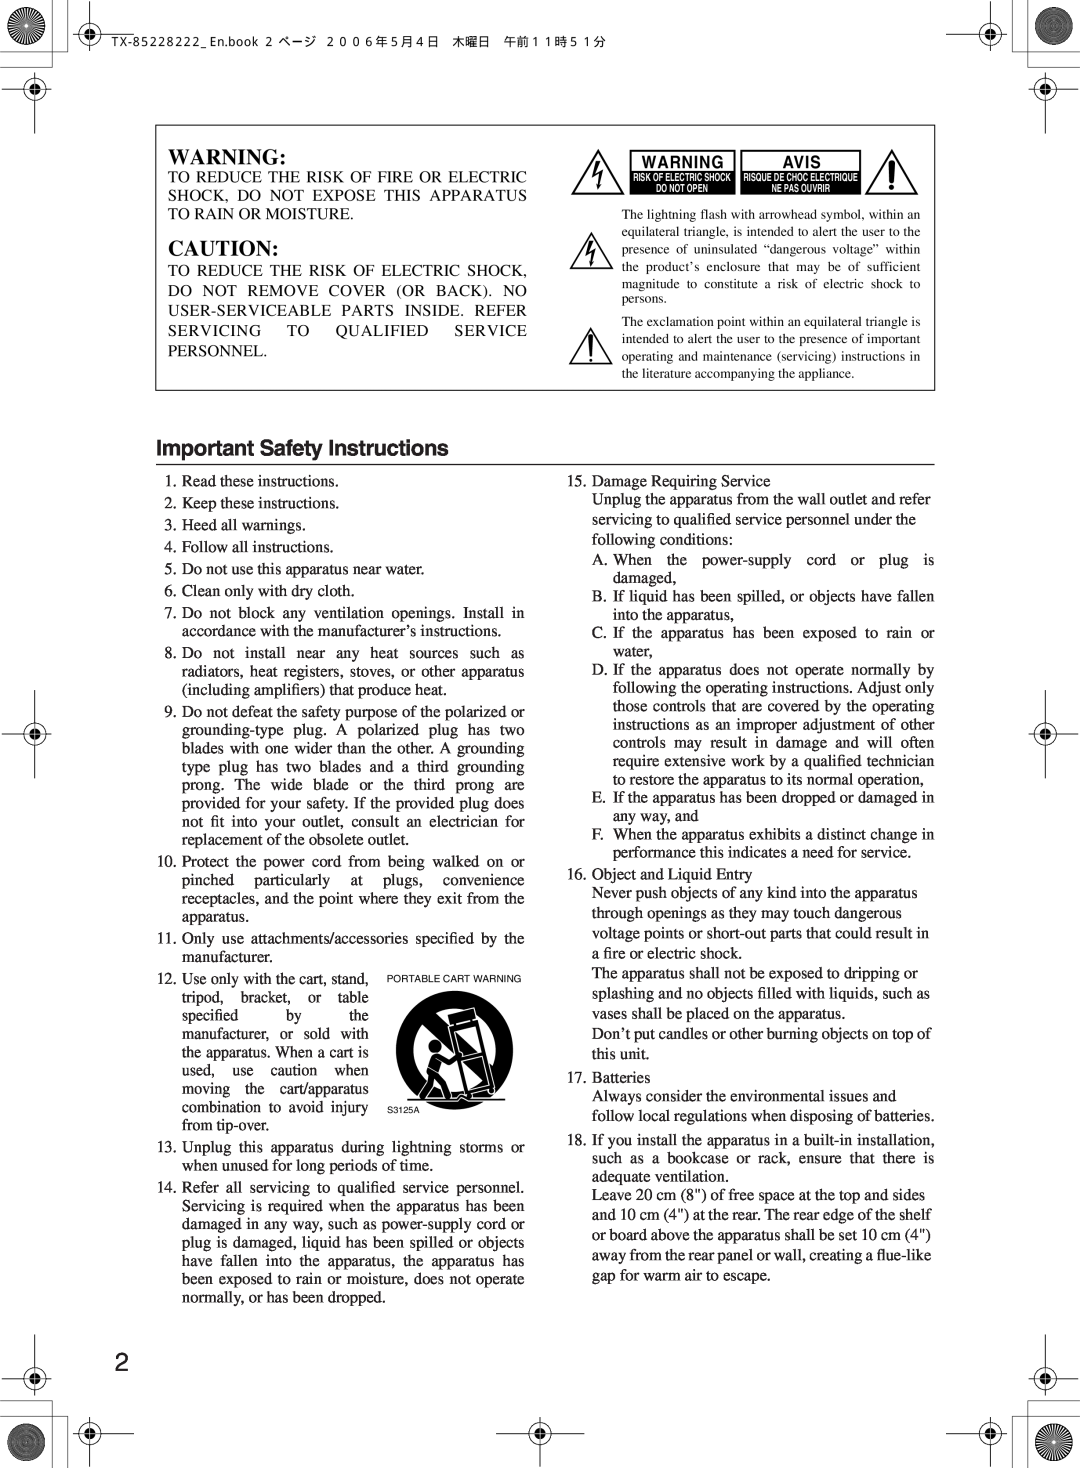 Onkyo TX-8222, TX-8522 instruction manual Important Safety Instructions, Avis 